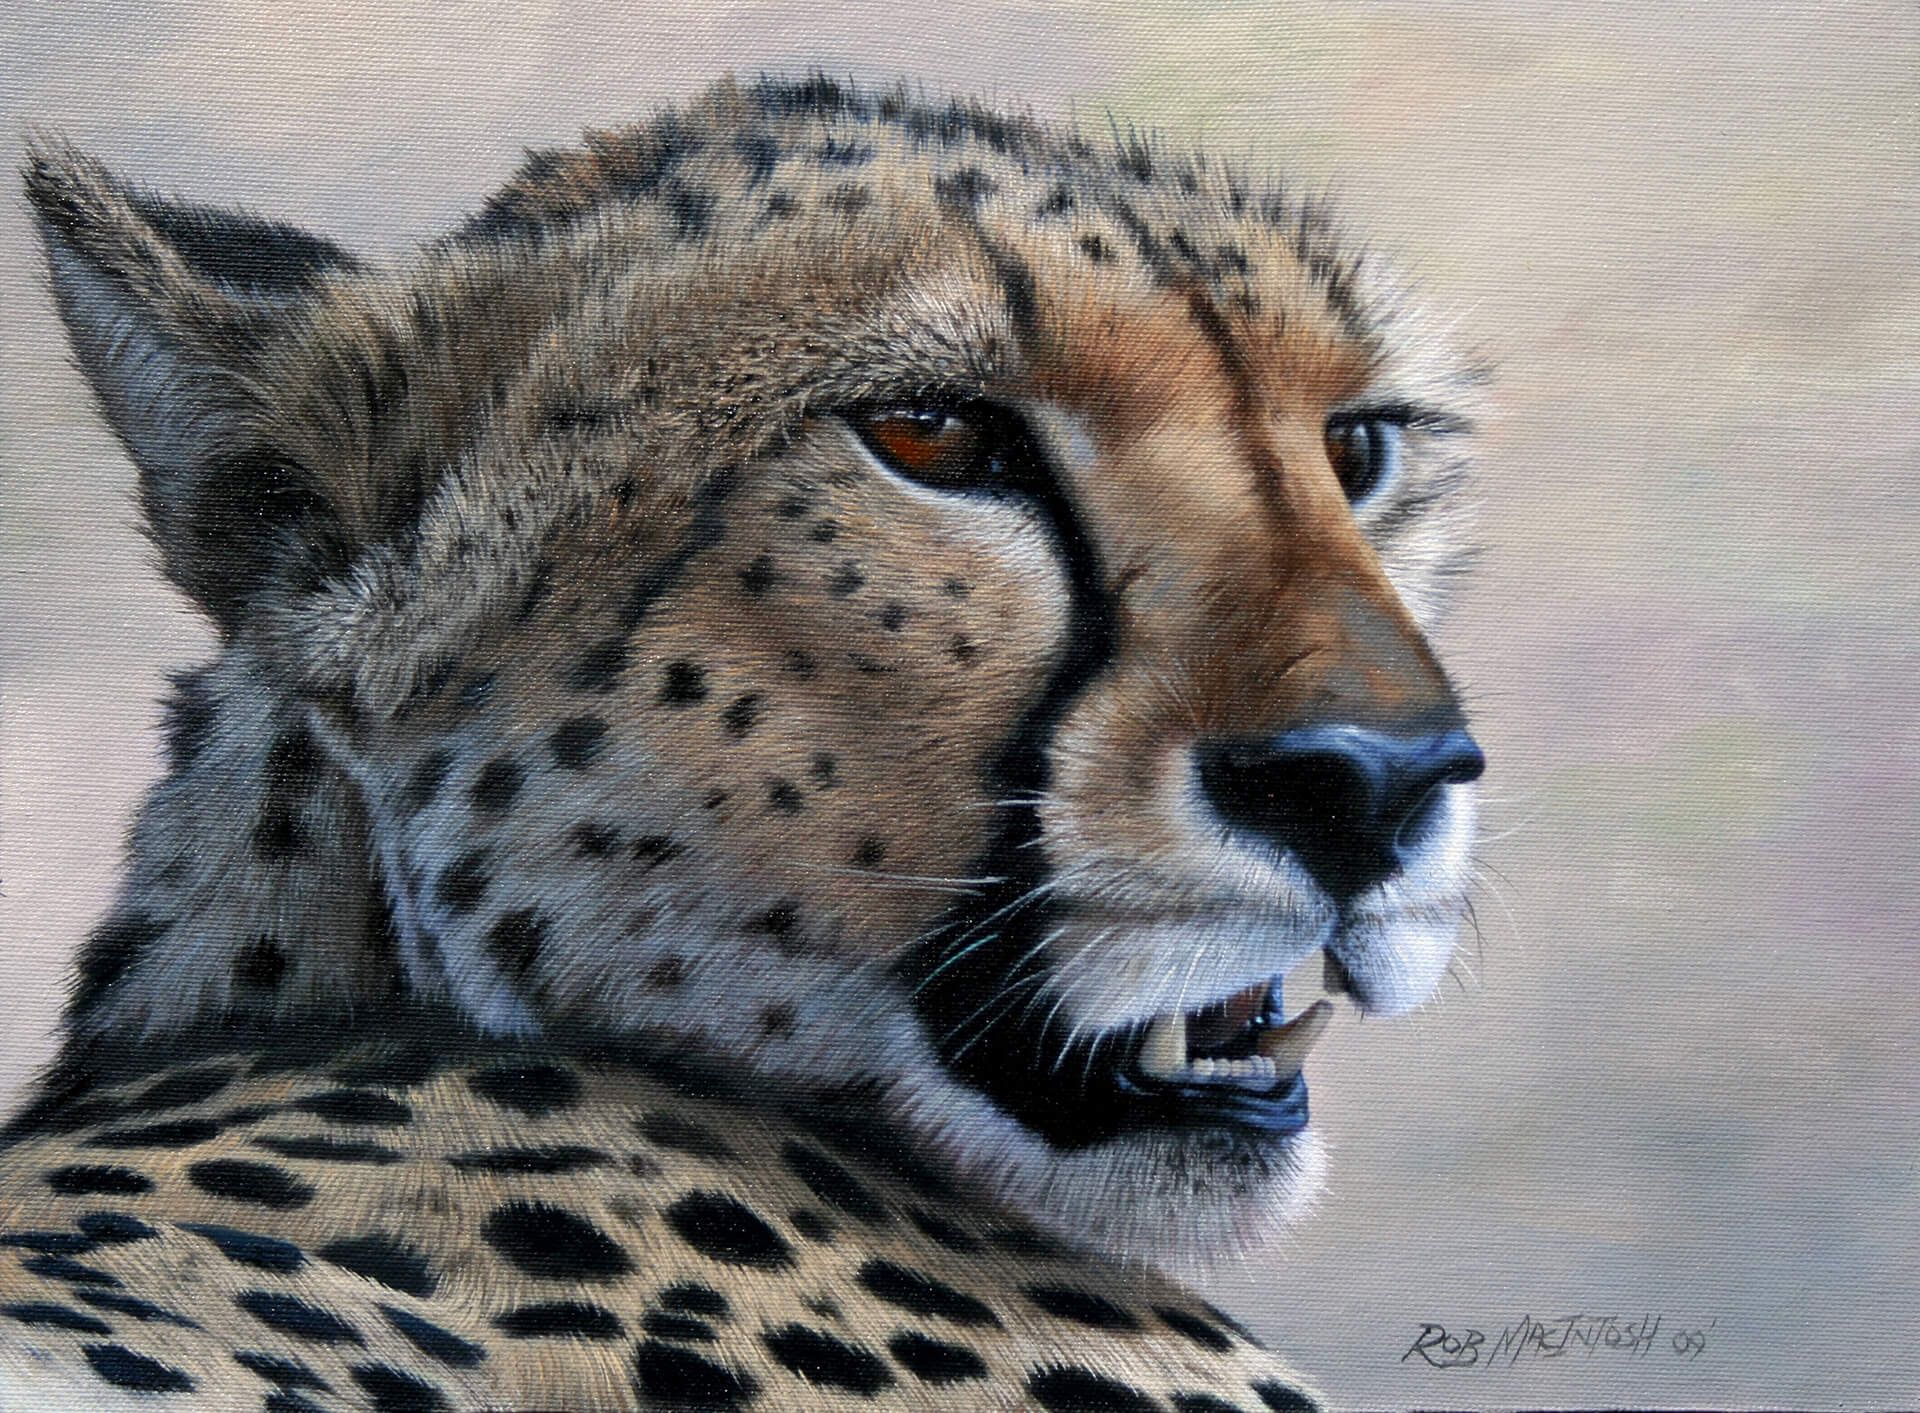 Photorealistic painting of a cheetah looking at something